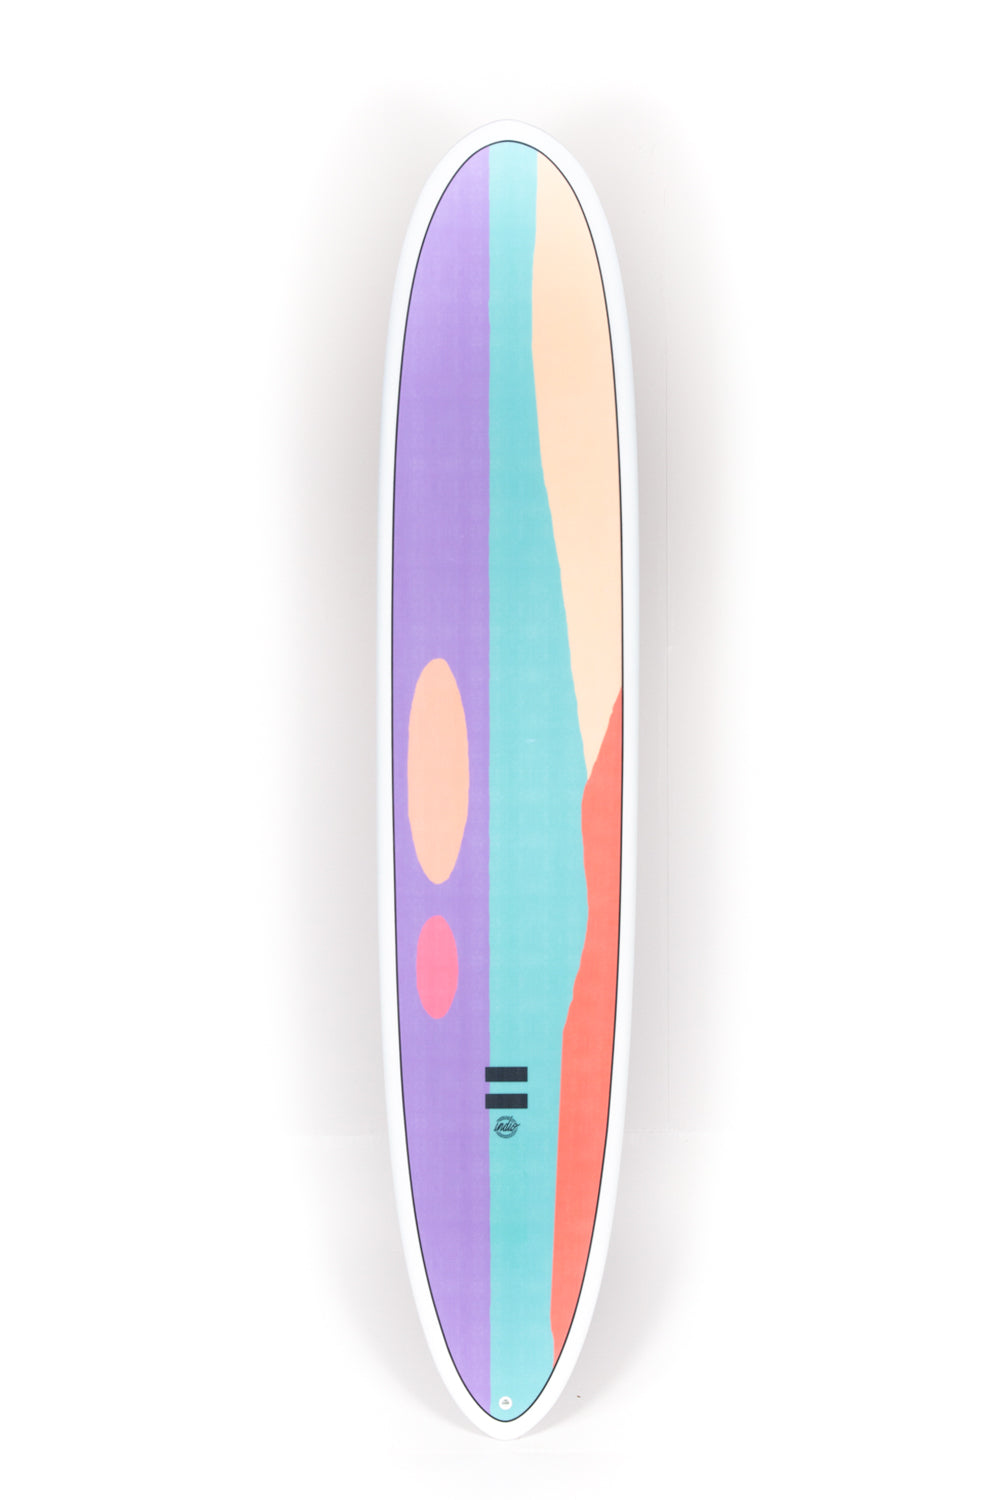 Pukas Surf Shop - Indio Surfboards - TRIM MACHINE India - Indio Endurance 9’1” x 20”7/8 x 2”7/8 - 70.2L